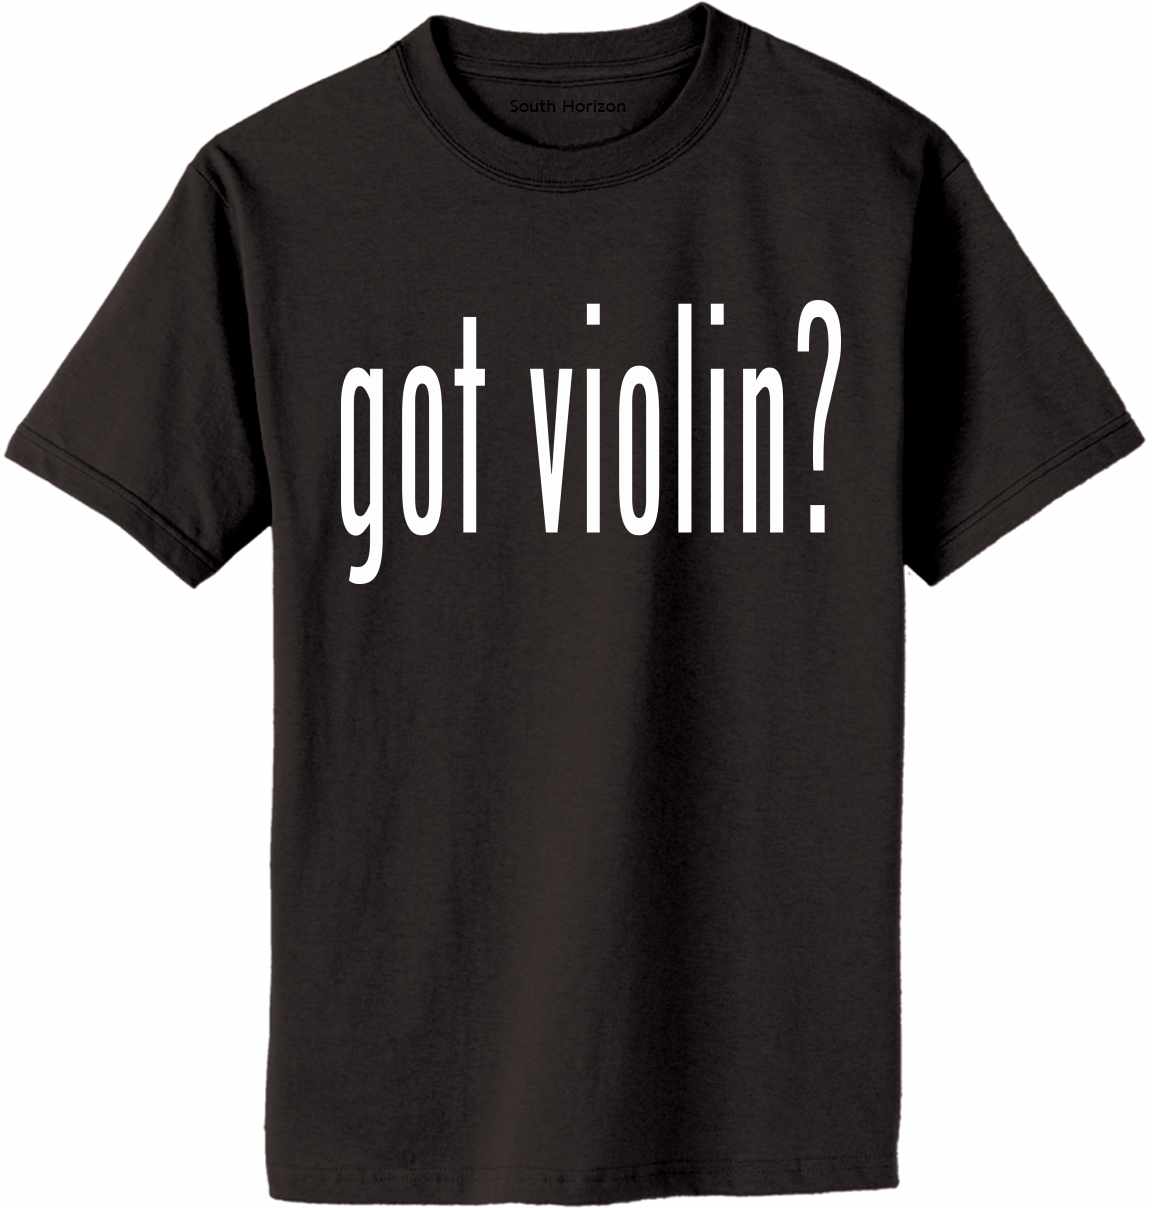 Got Violin? Adult T-Shirt (#897-1)